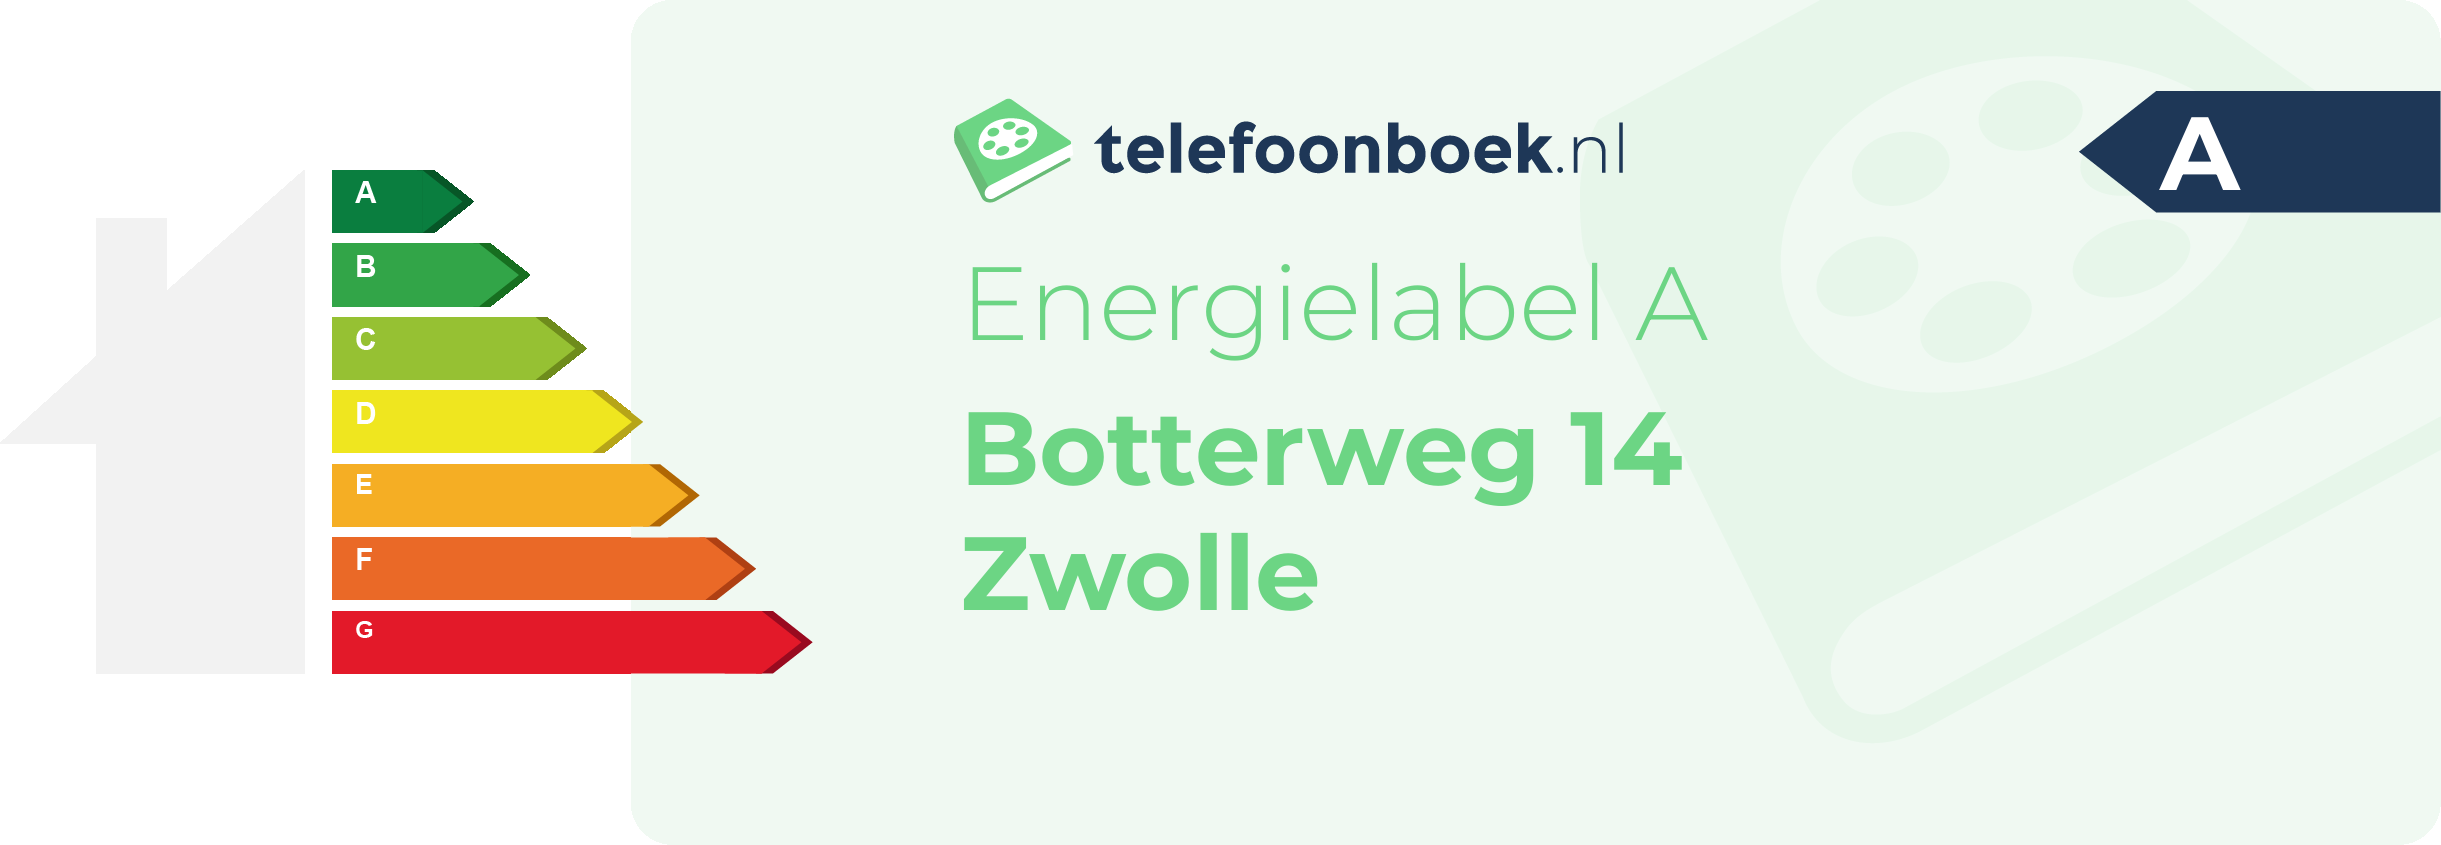 Energielabel Botterweg 14 Zwolle